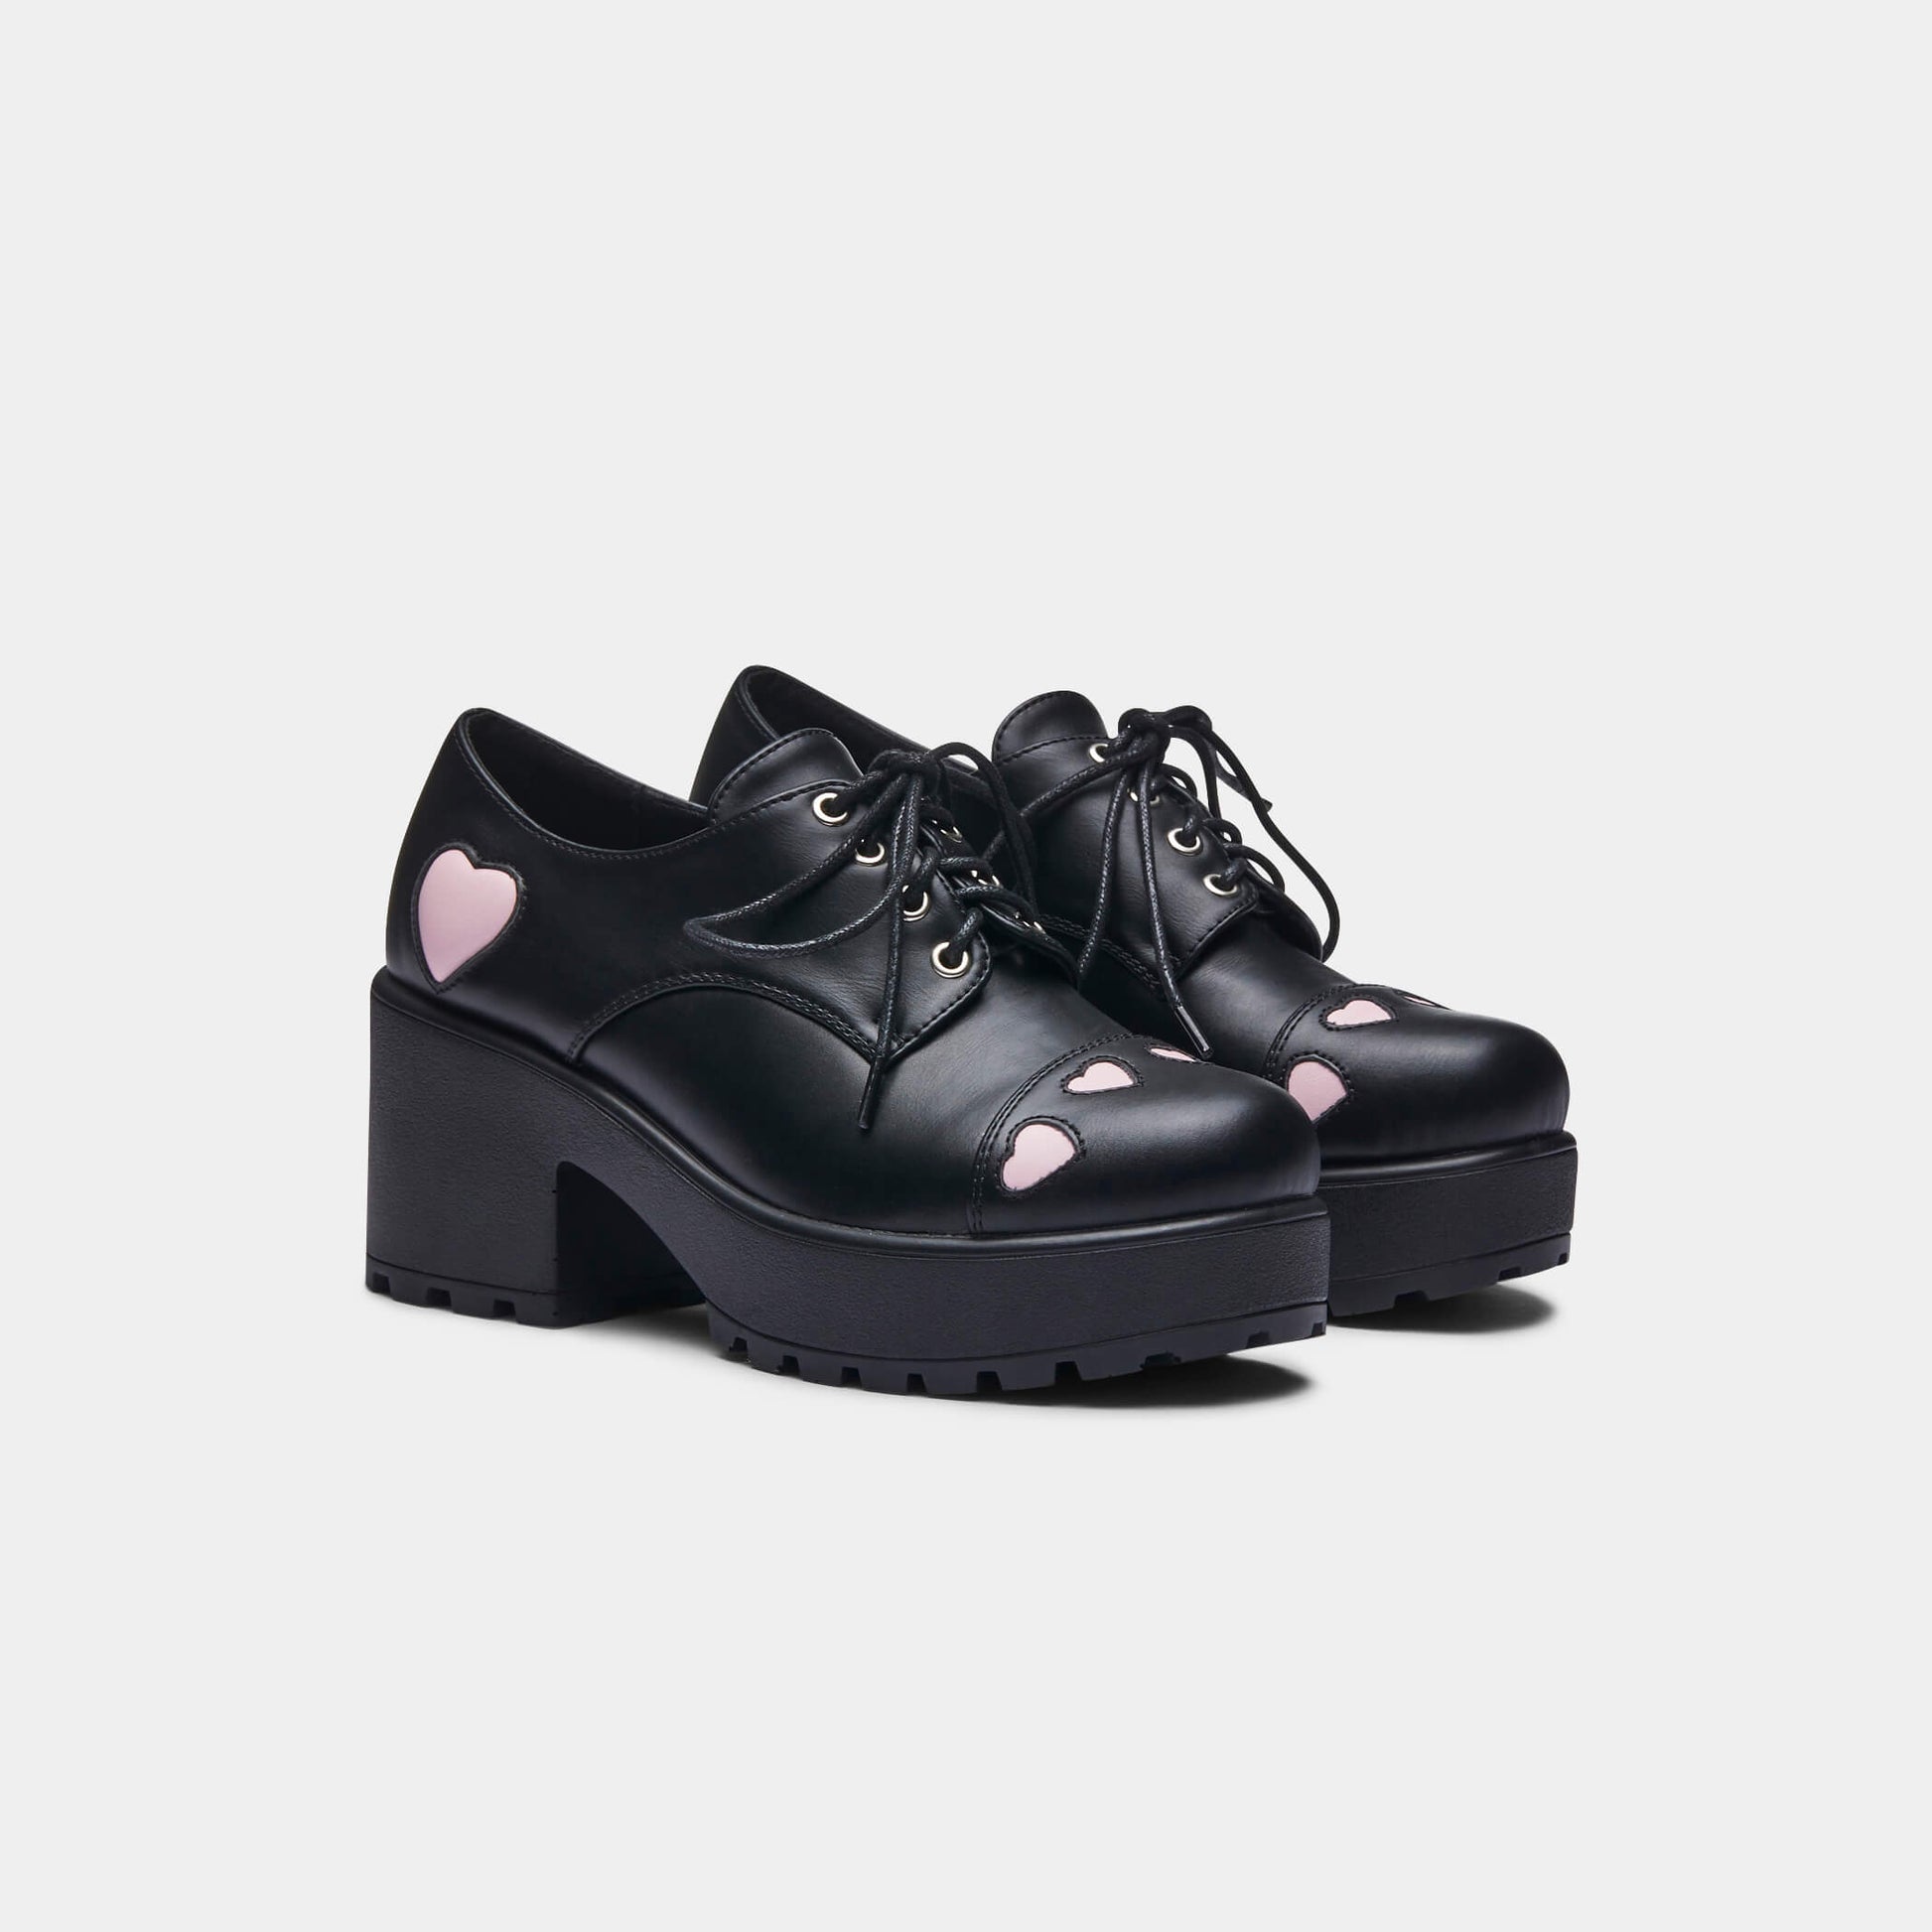 Tennin Heart Shoes - Shoes - KOI Footwear - Black - Three-Quarter View